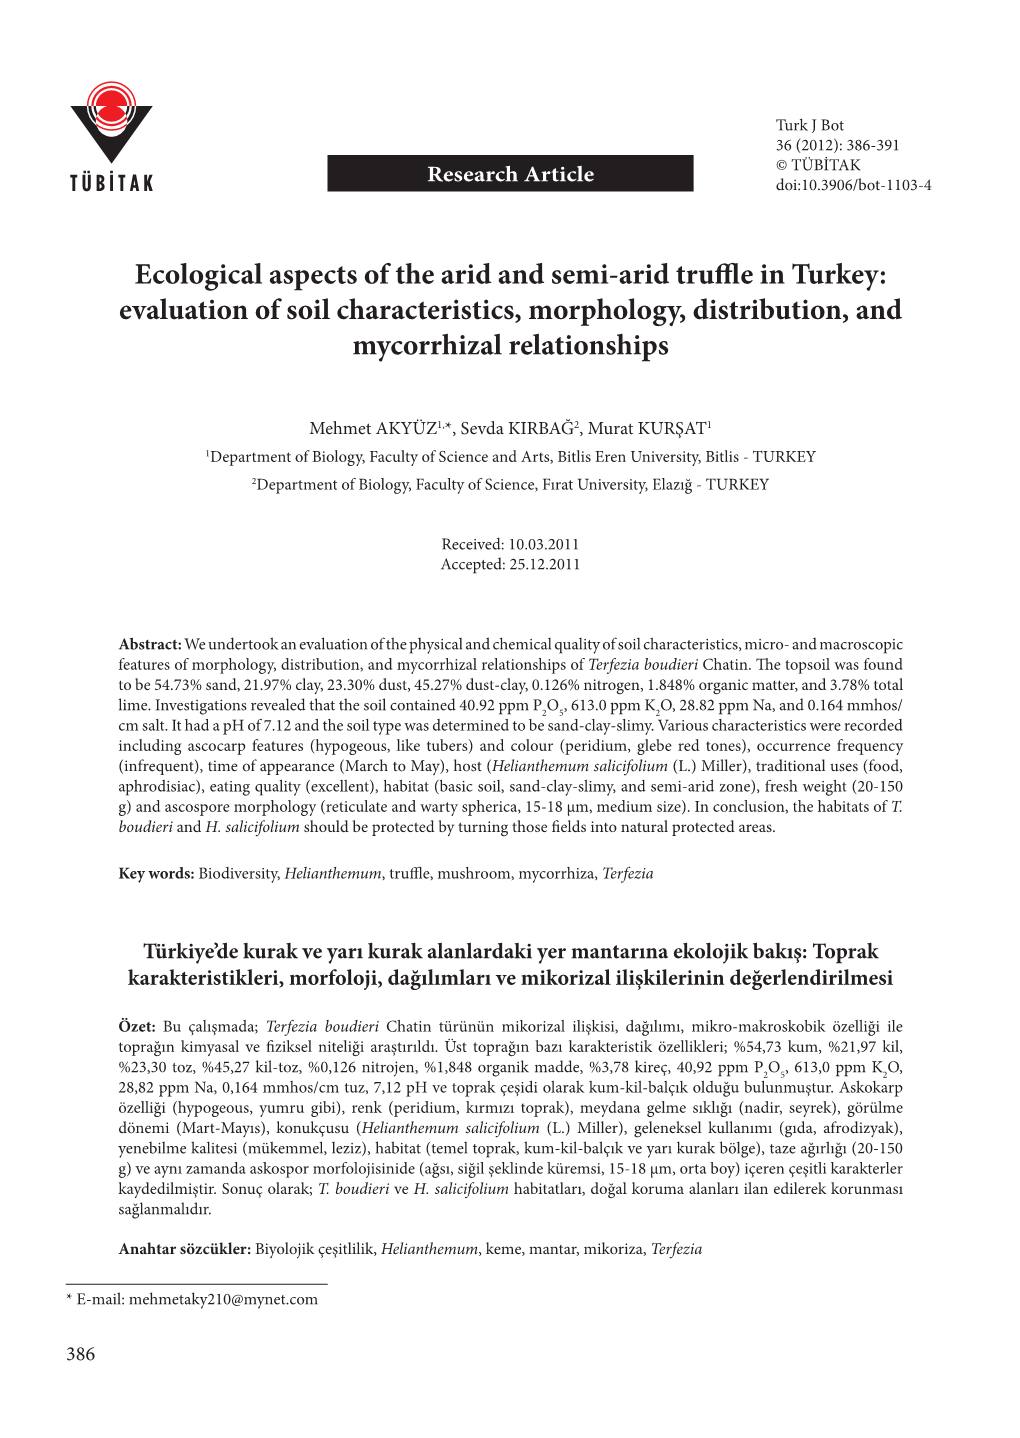 Ecological Aspects of the Arid and Semi-Arid Truffle in Turkey